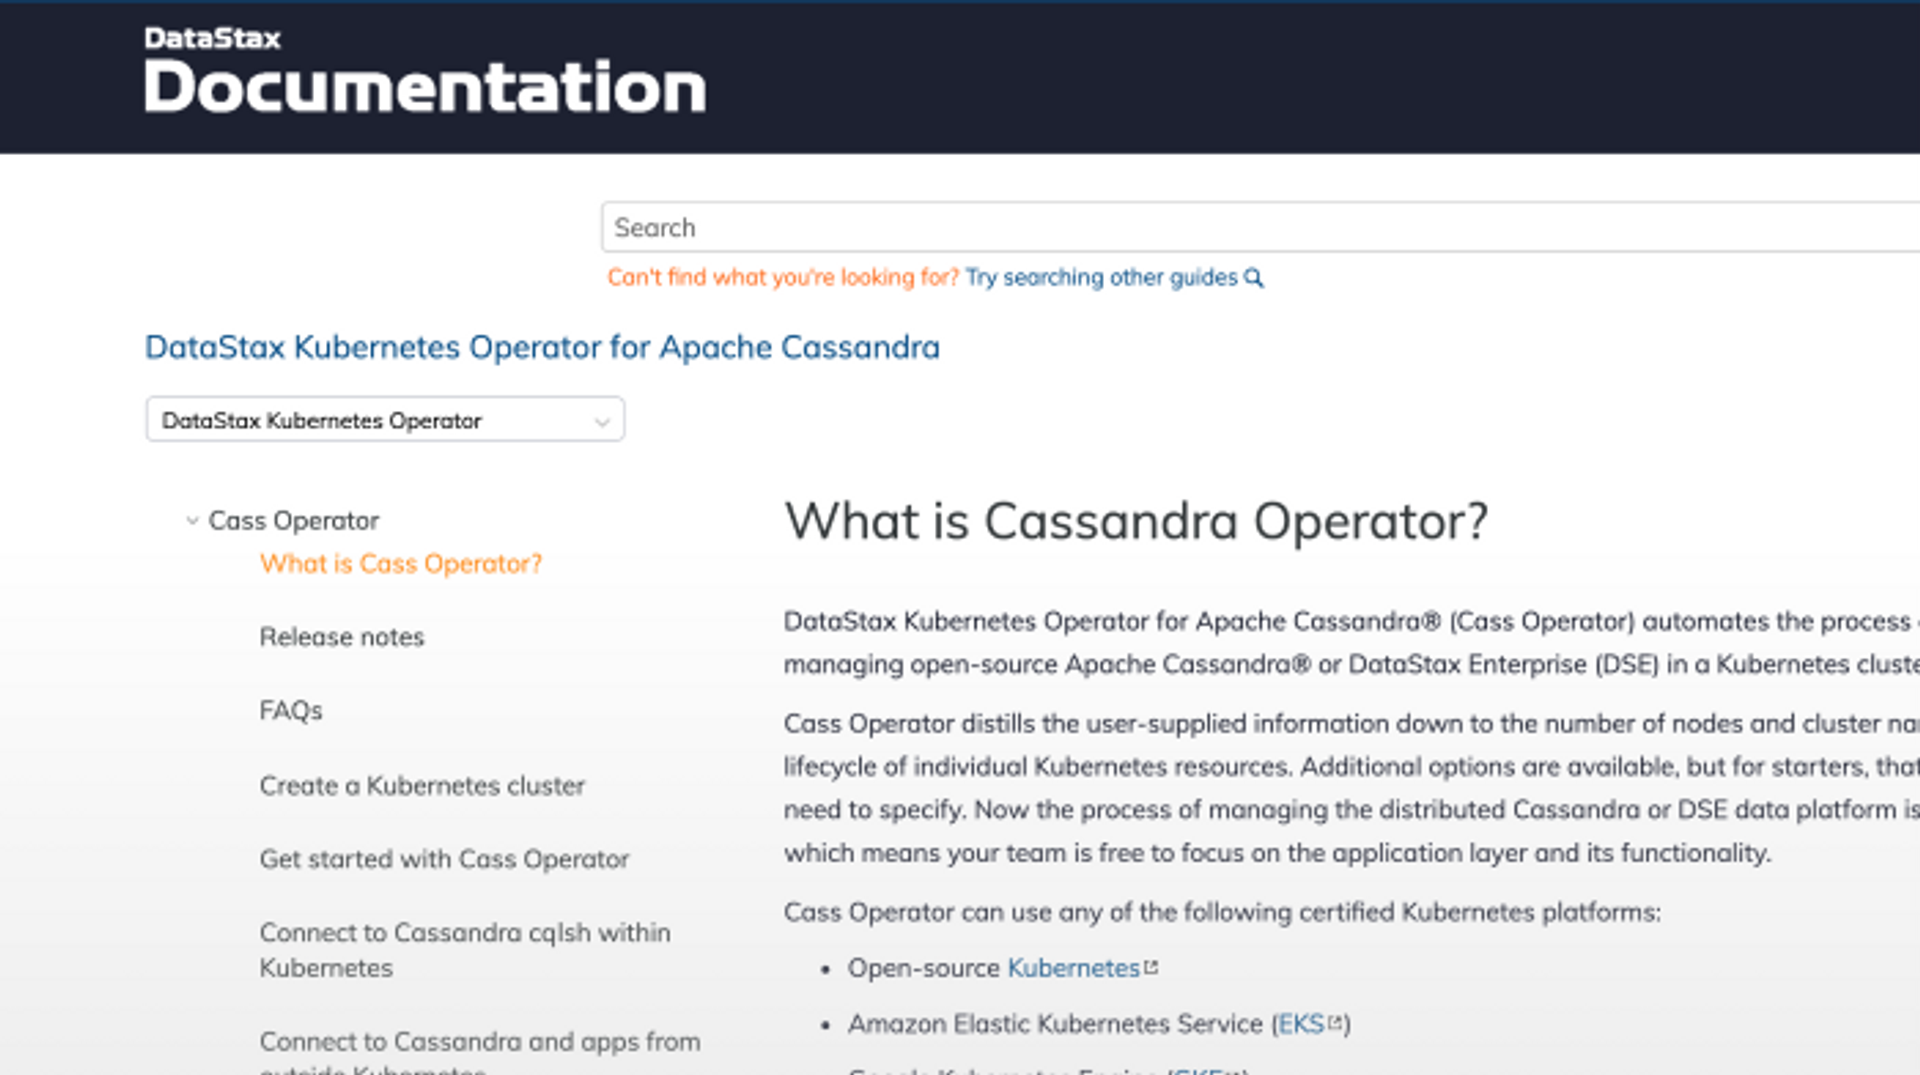 Docs: What is Cassandra Operator?